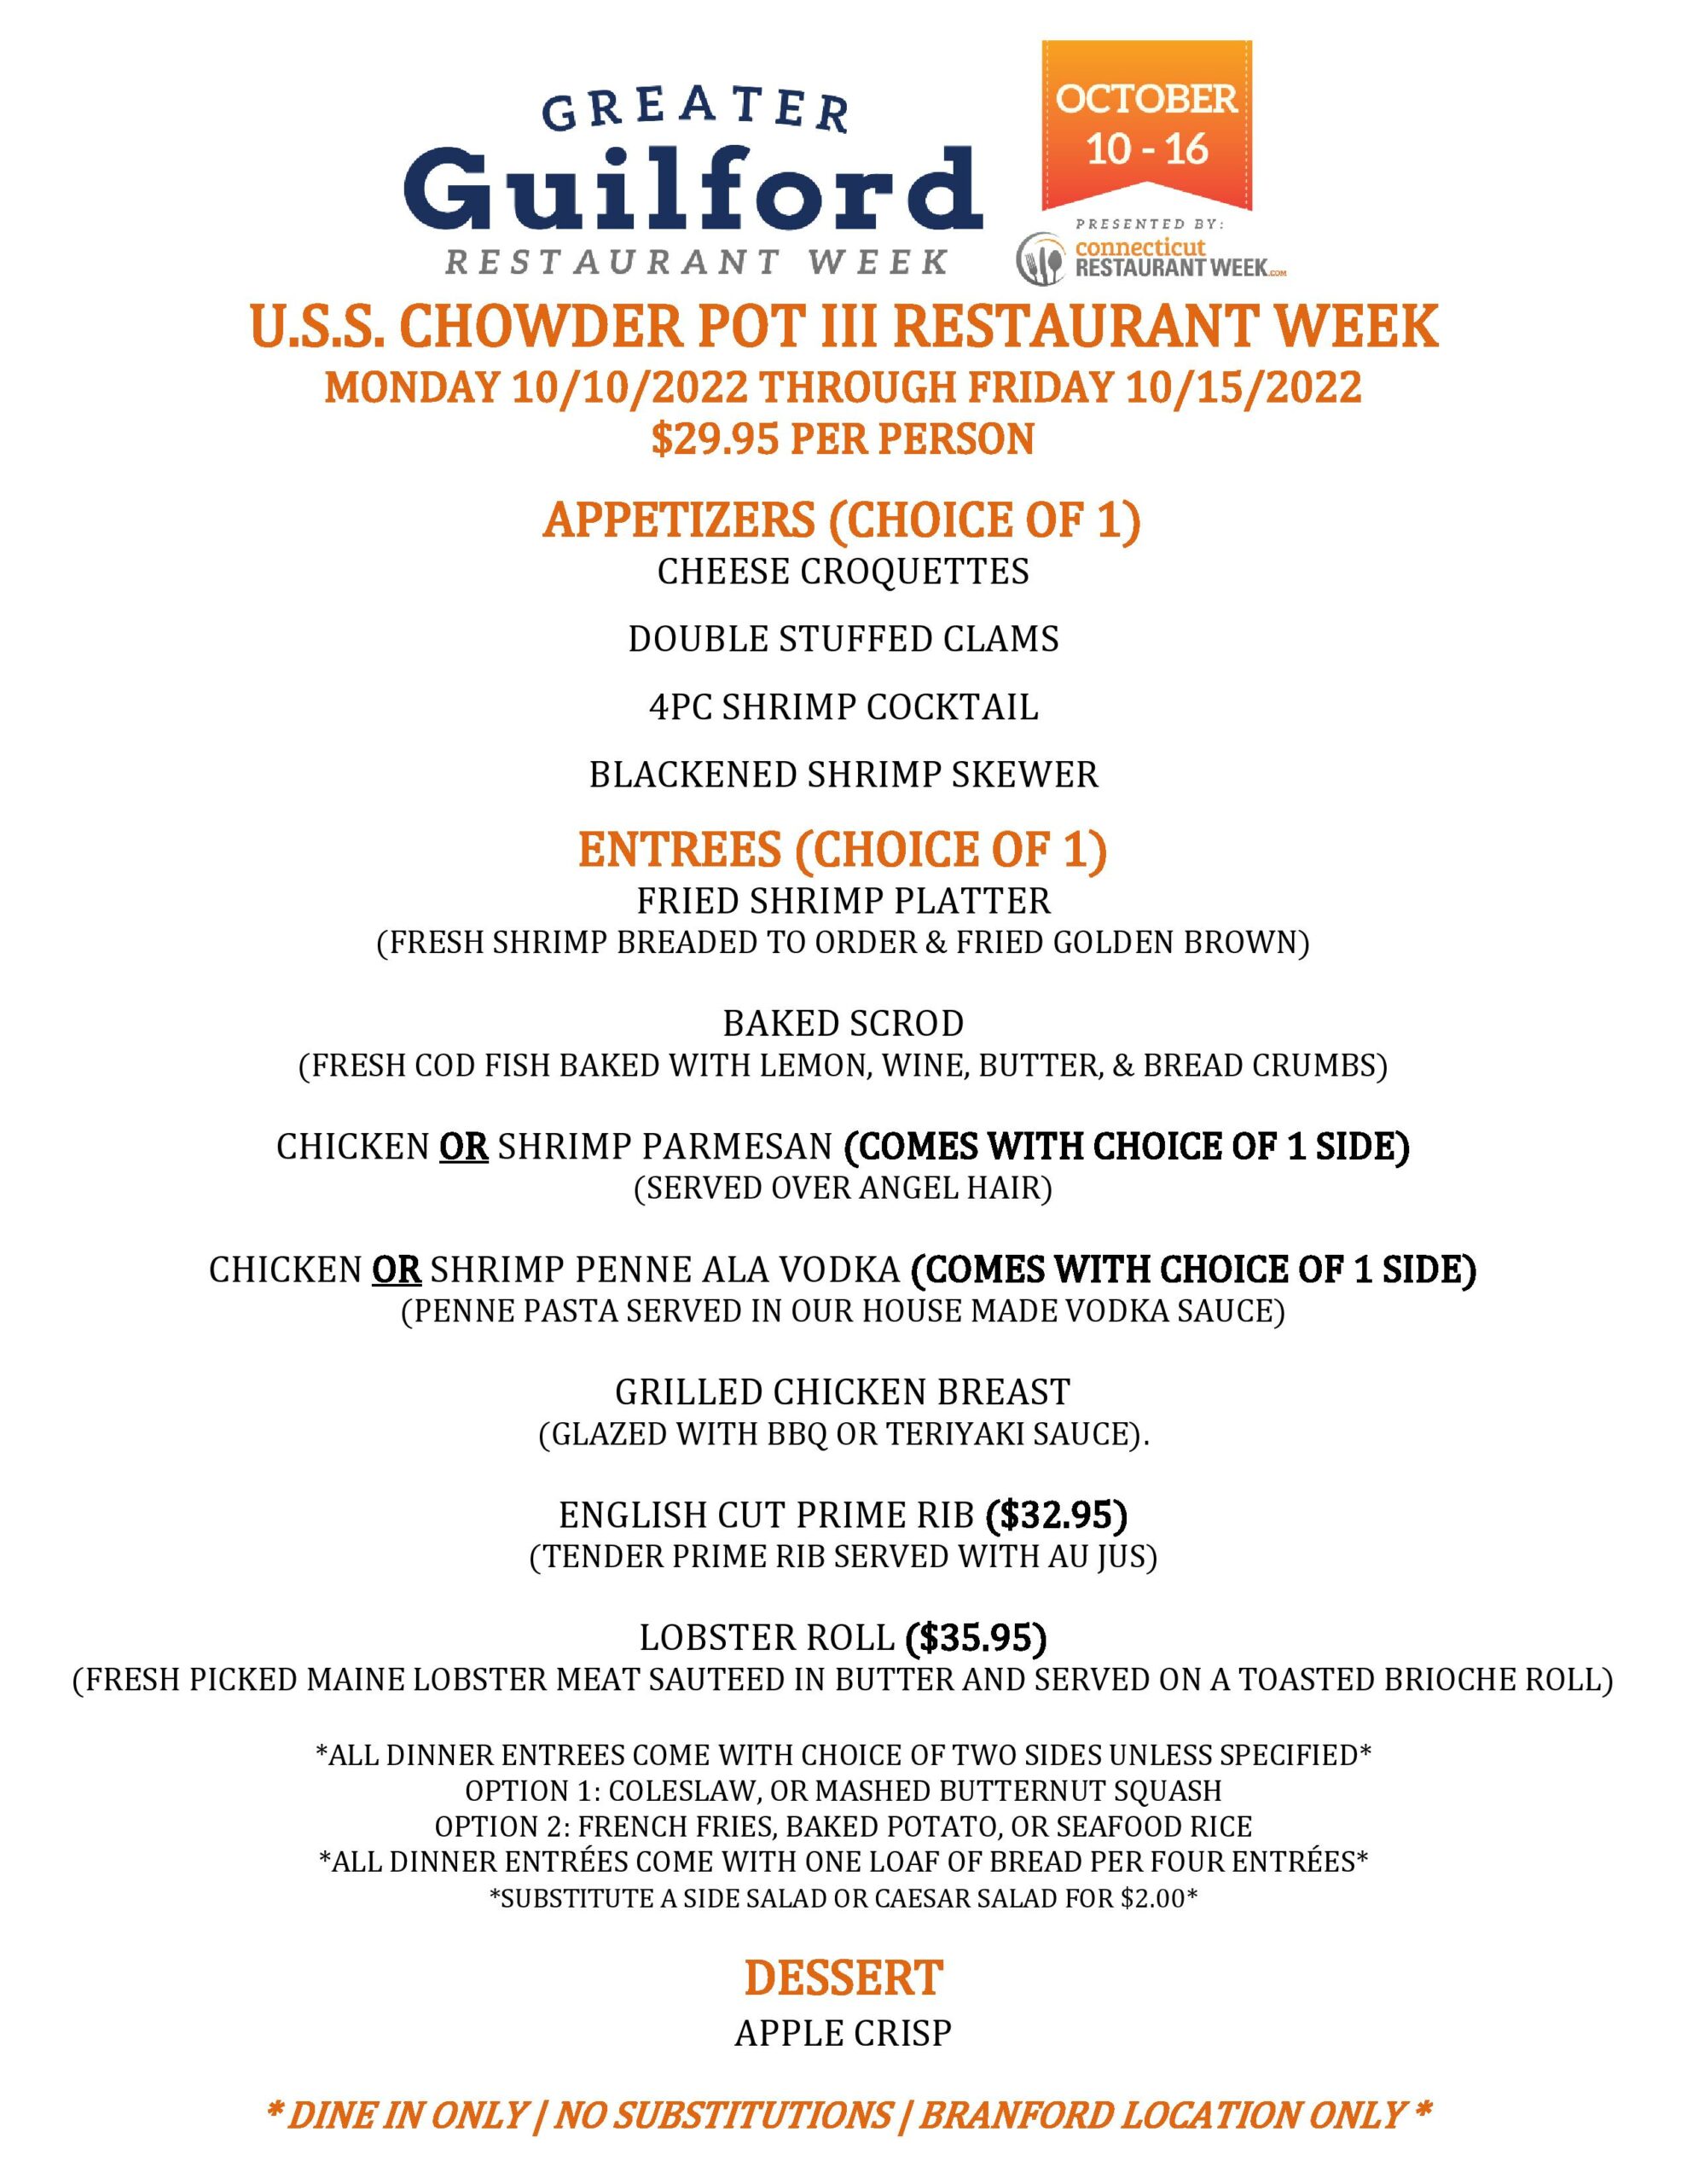 USS Chowderpot III Greater Guilford Restaurant Week Fall 2022